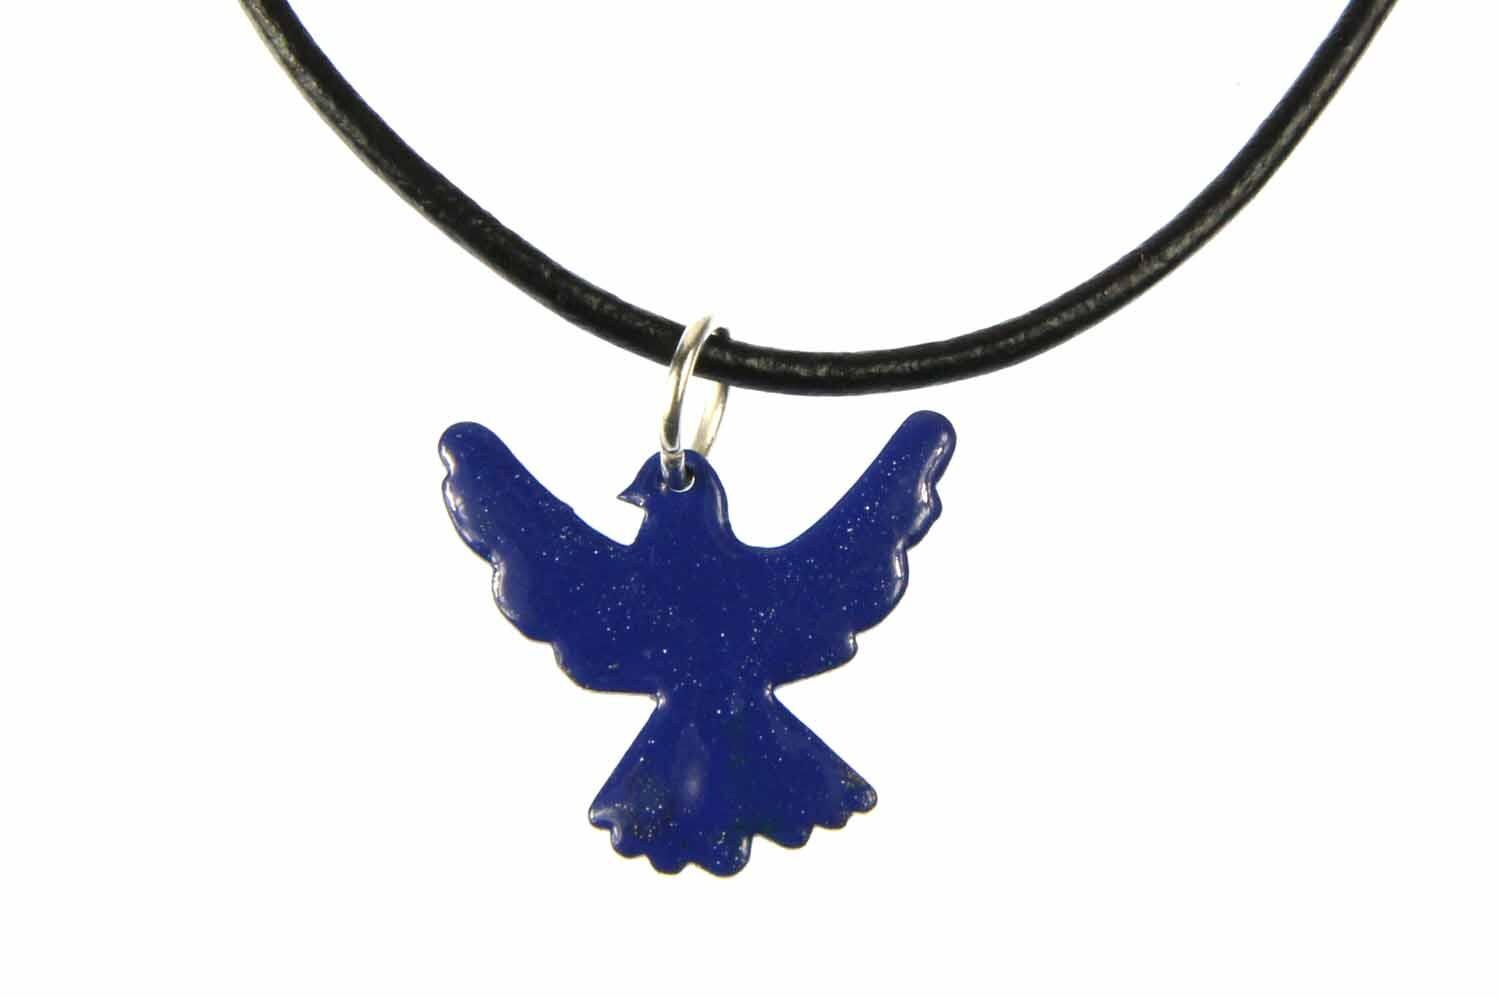 Emaille Taube Friedenstaube Kette Miniblings Halskette Vogel Lederband 45cm Blau Leder von Miniblings